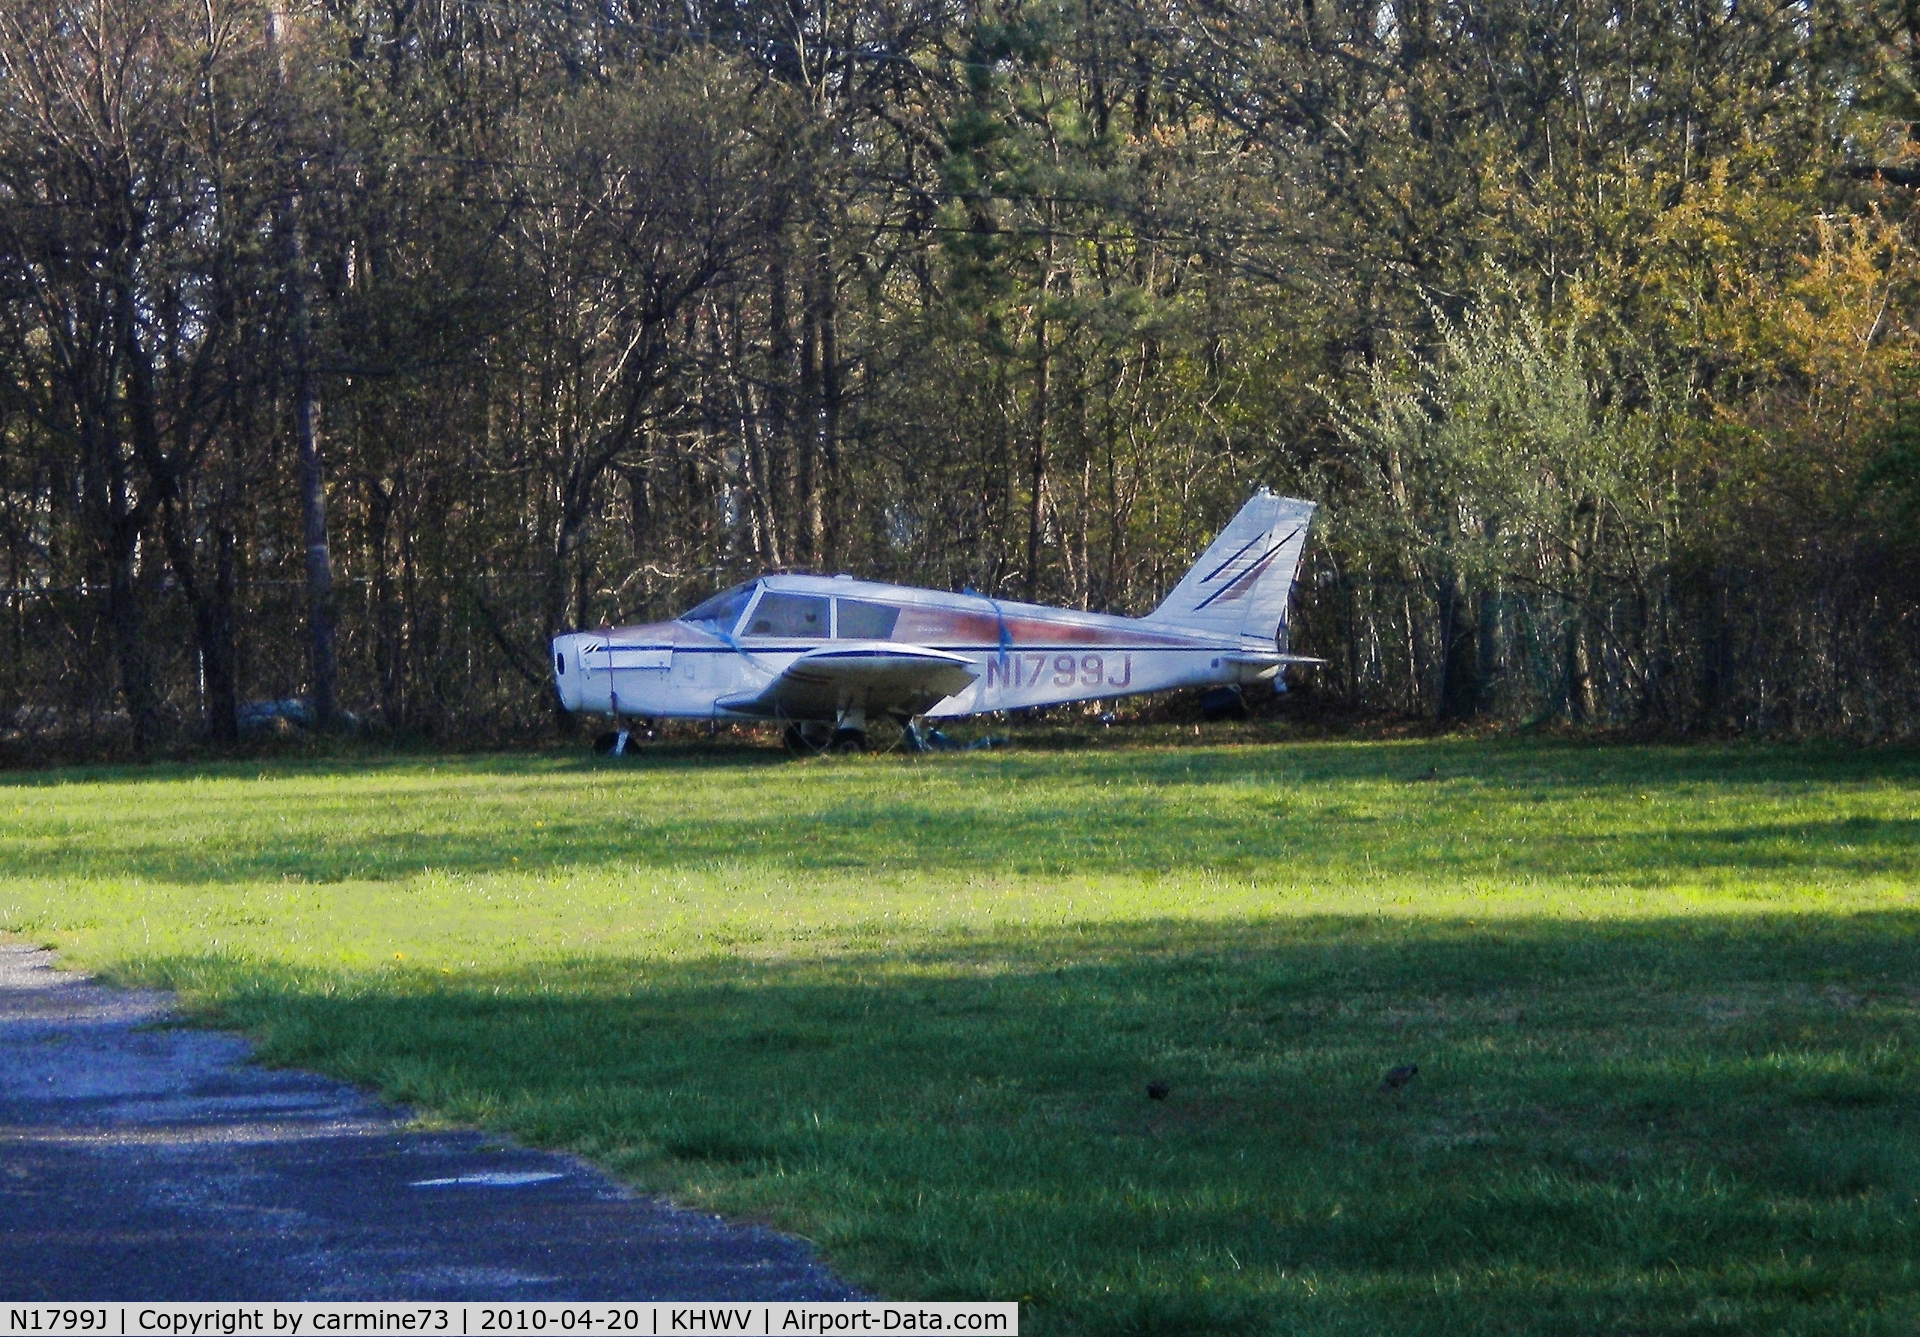 N1799J, 1968 Piper PA-28-140 C/N 28-24225, Piper aircraft in sad shape